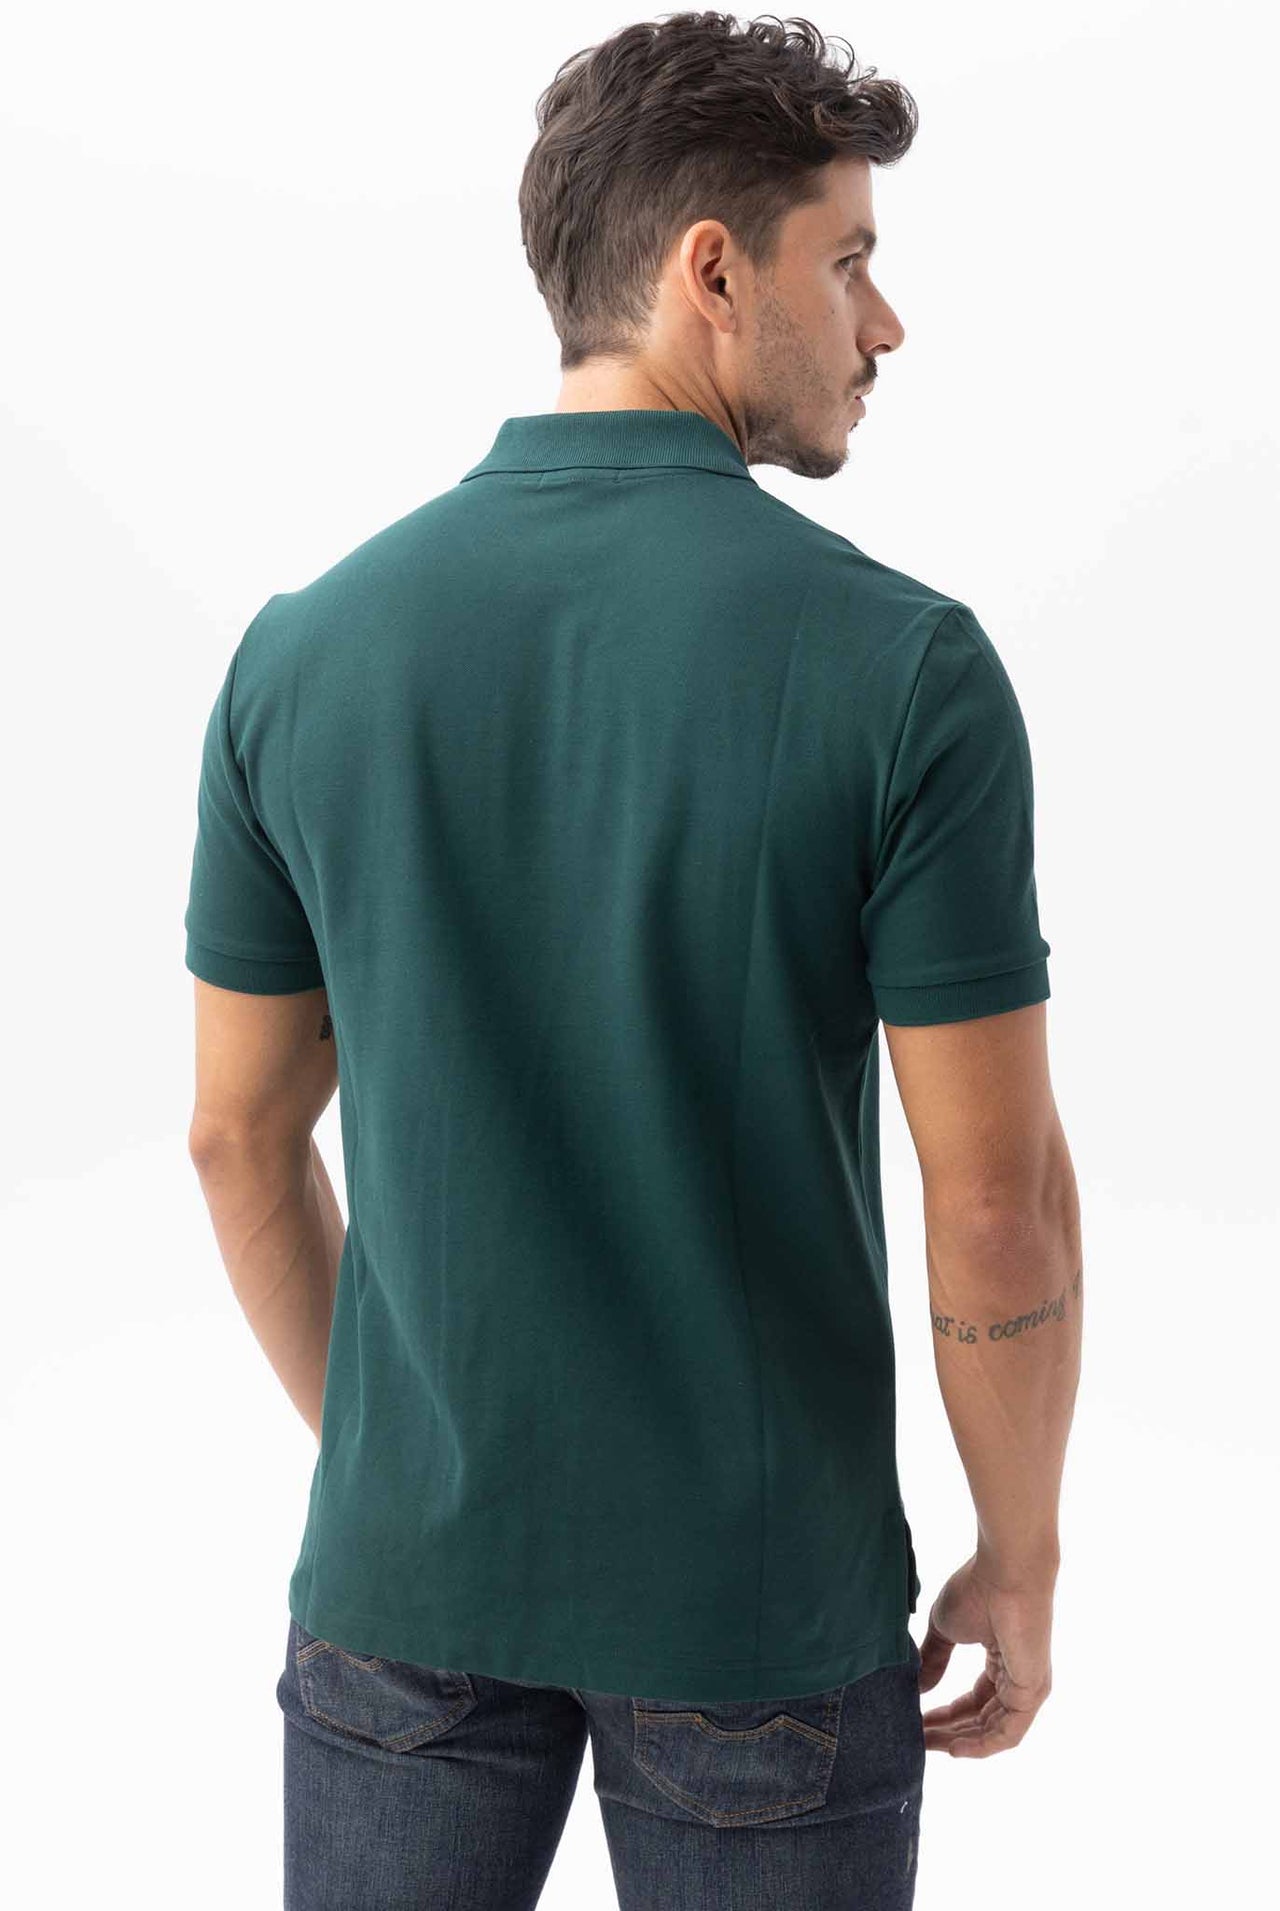 Camiseta Tipo Polo Chevignon Ajuste Clásico Manga Corta, Cuello Tejido Tono Verde